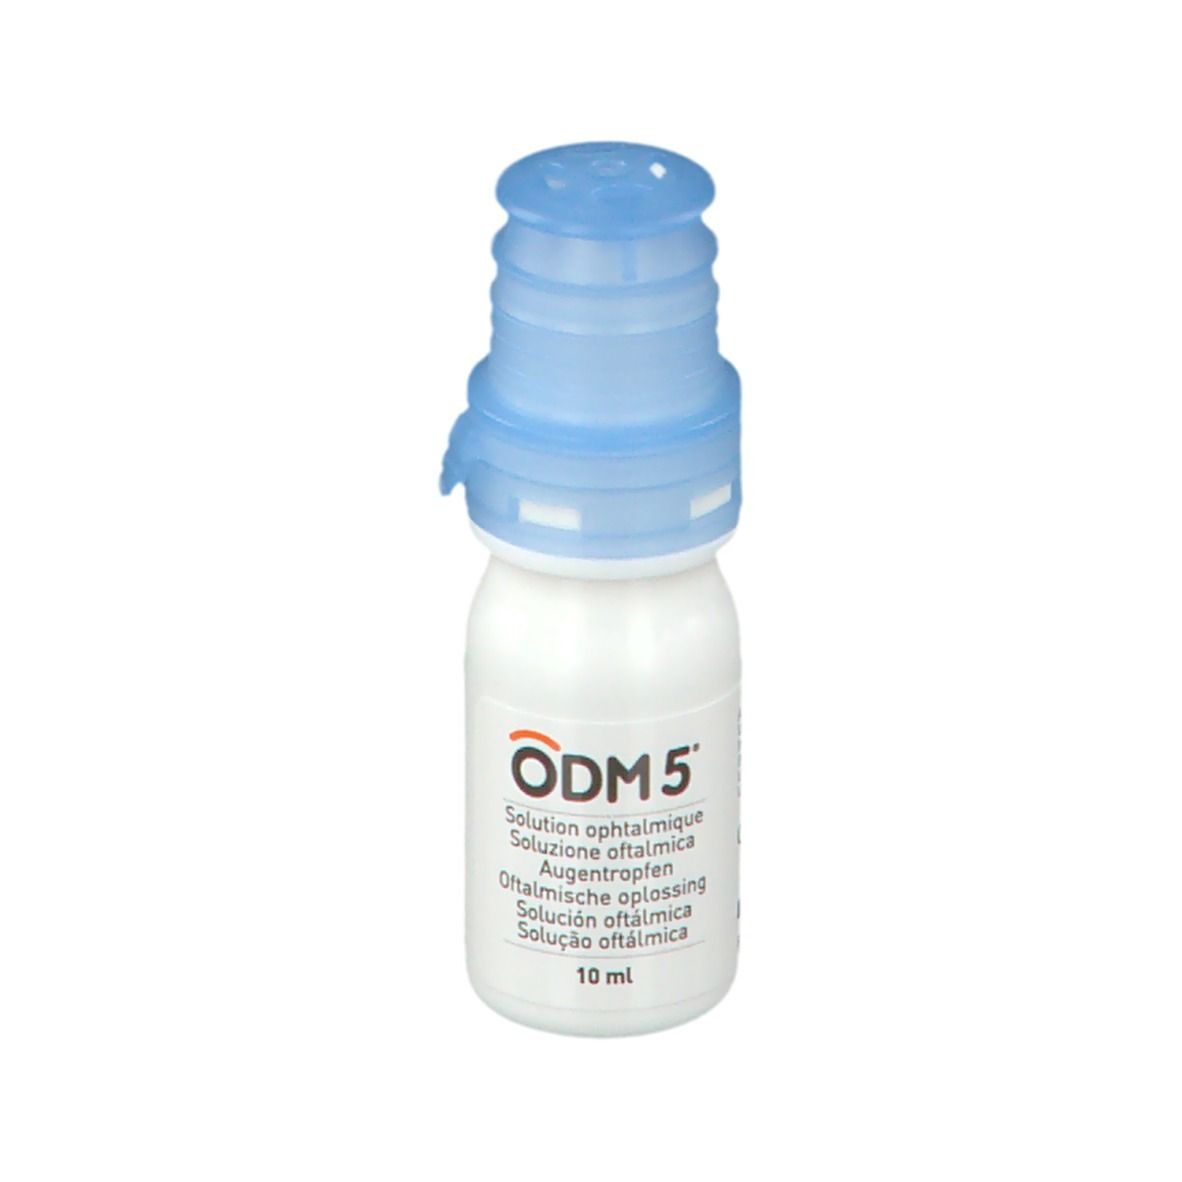 Image of ODM 5® Augentropfen